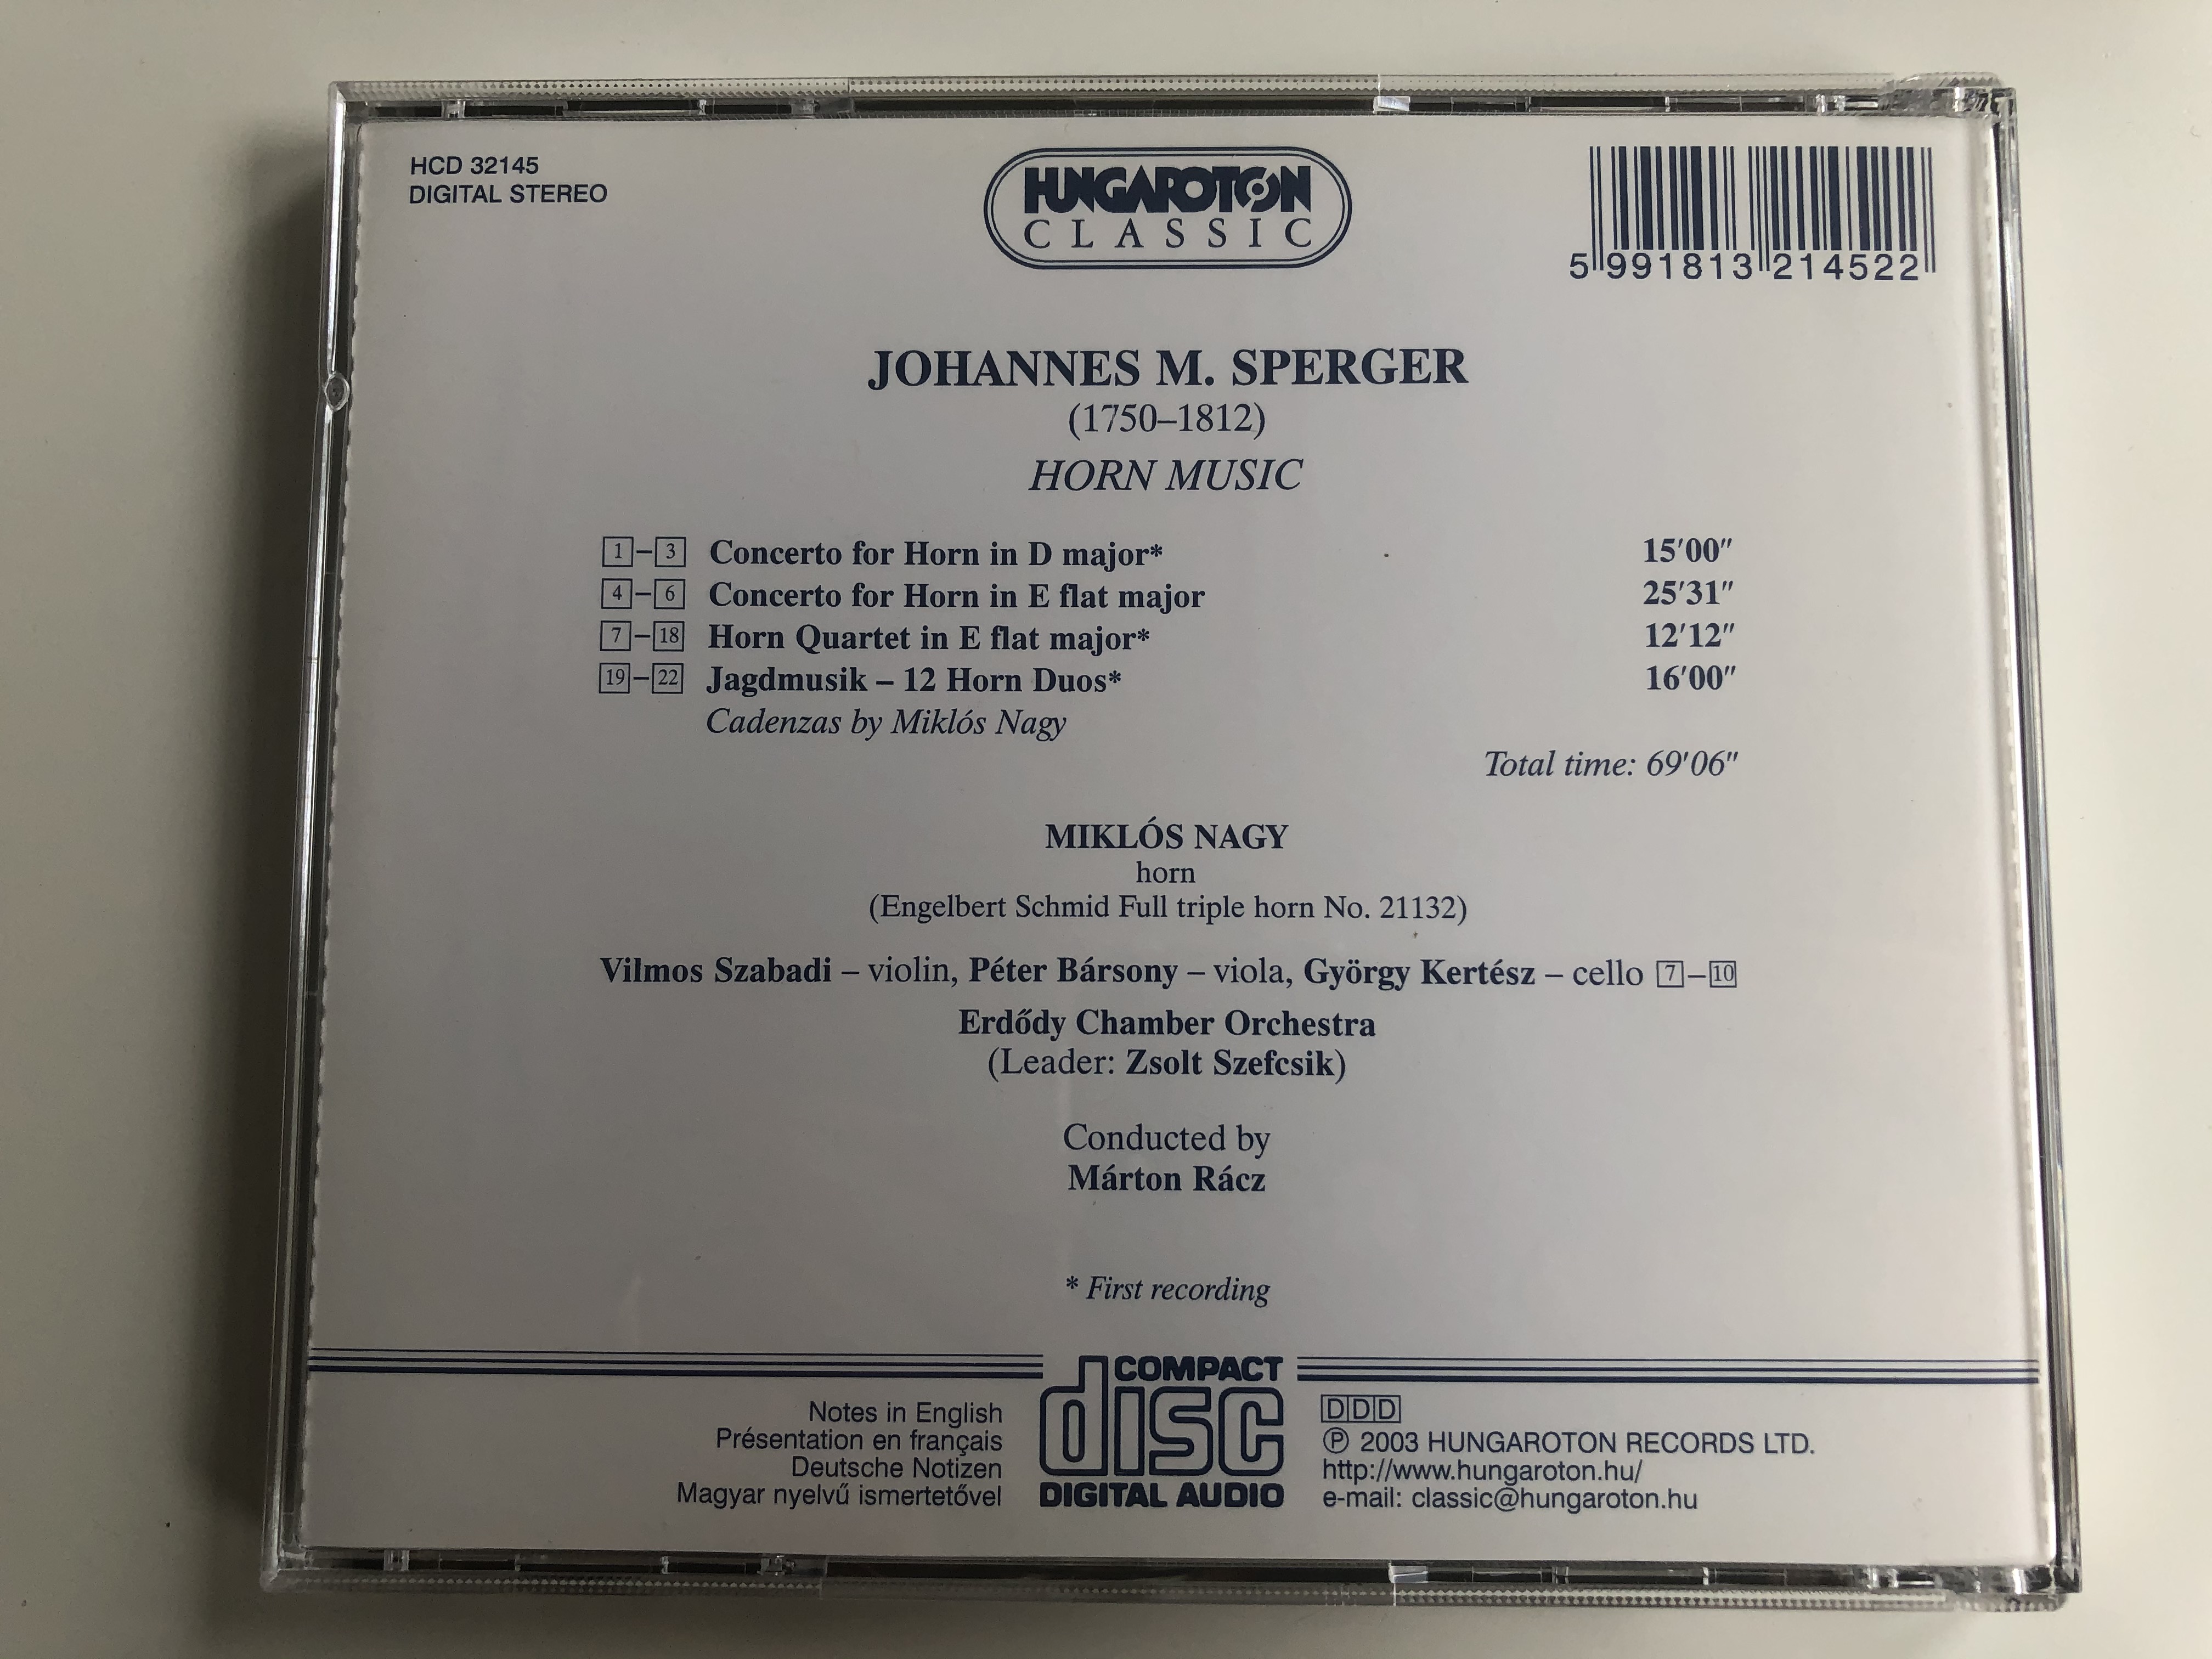 johannes-m.-sperger-horn-music-miklos-nagy-vilmos-szabadi-peter-barsony-gyorgy-kertesz-erdody-chamber-orchestra-zsolt-szefcsik-marton-racz-hungaroton-classic-audio-cd-2003-stereo-hcd-3-8-.jpg